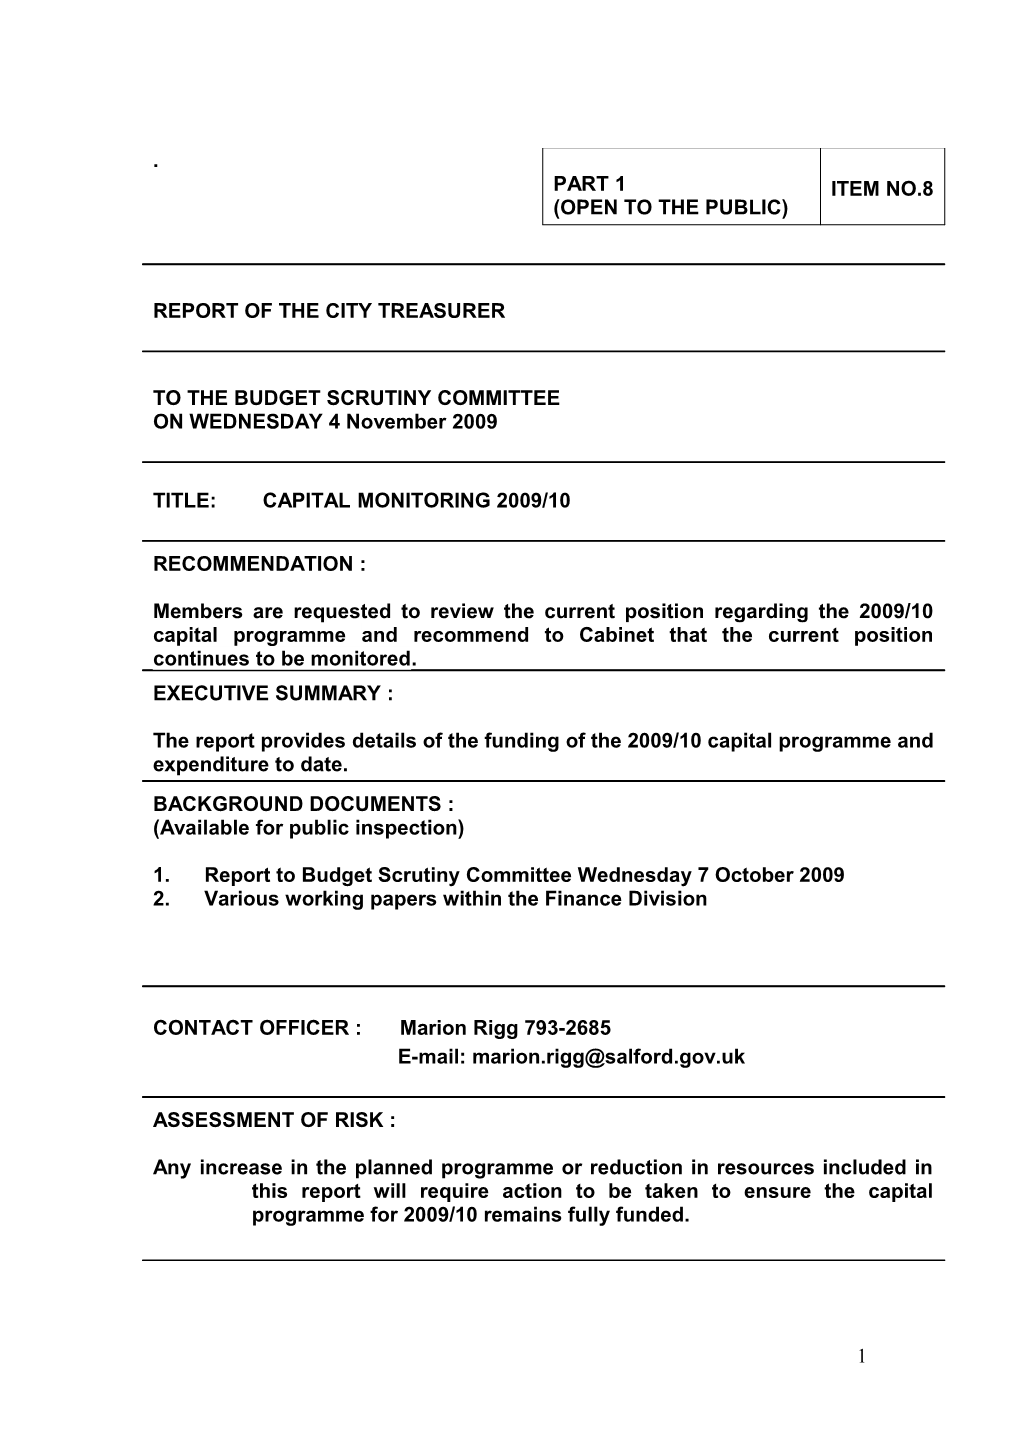 This Report Now Advises Members of Recent Developments Regarding the 2009/10 Capital Programme